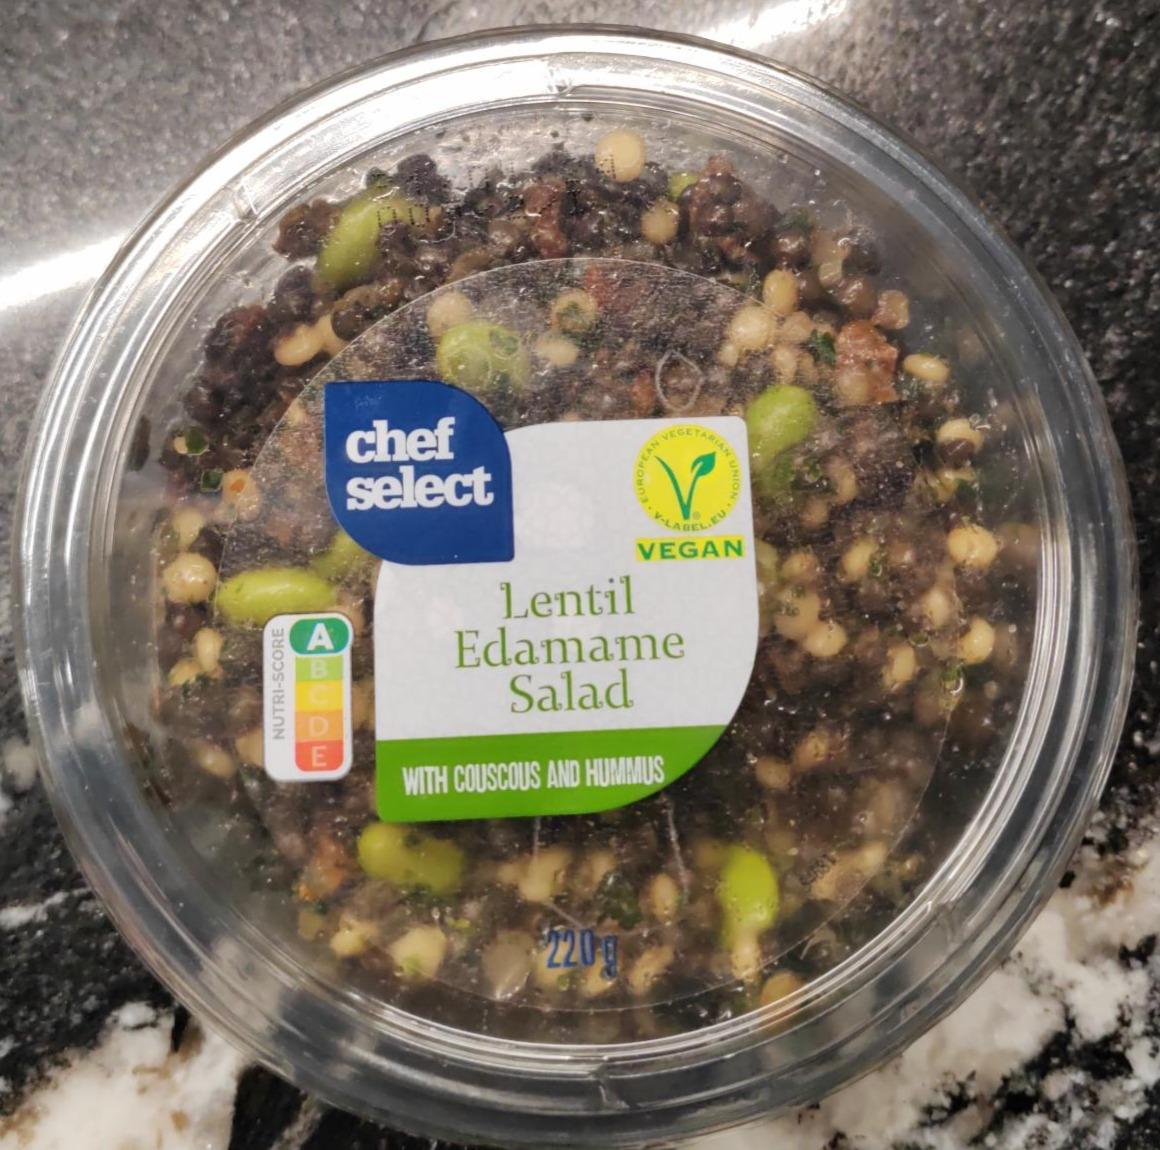 Zdjęcia - Lentil Edamame Salad with couscous and hummus Chef Select